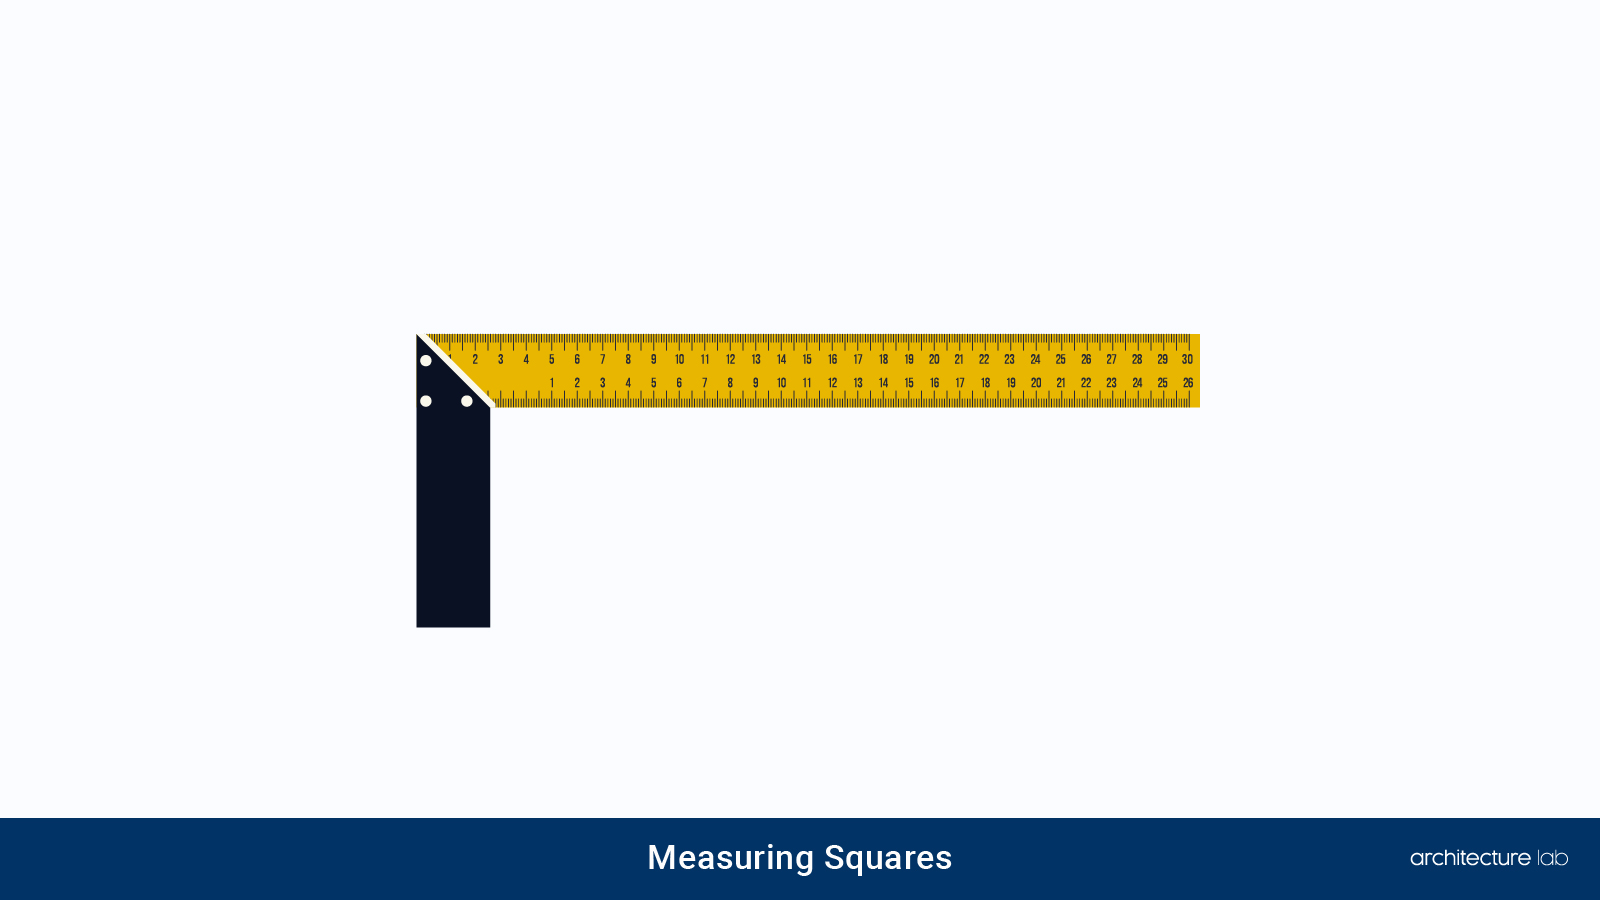 9. Measuring squares